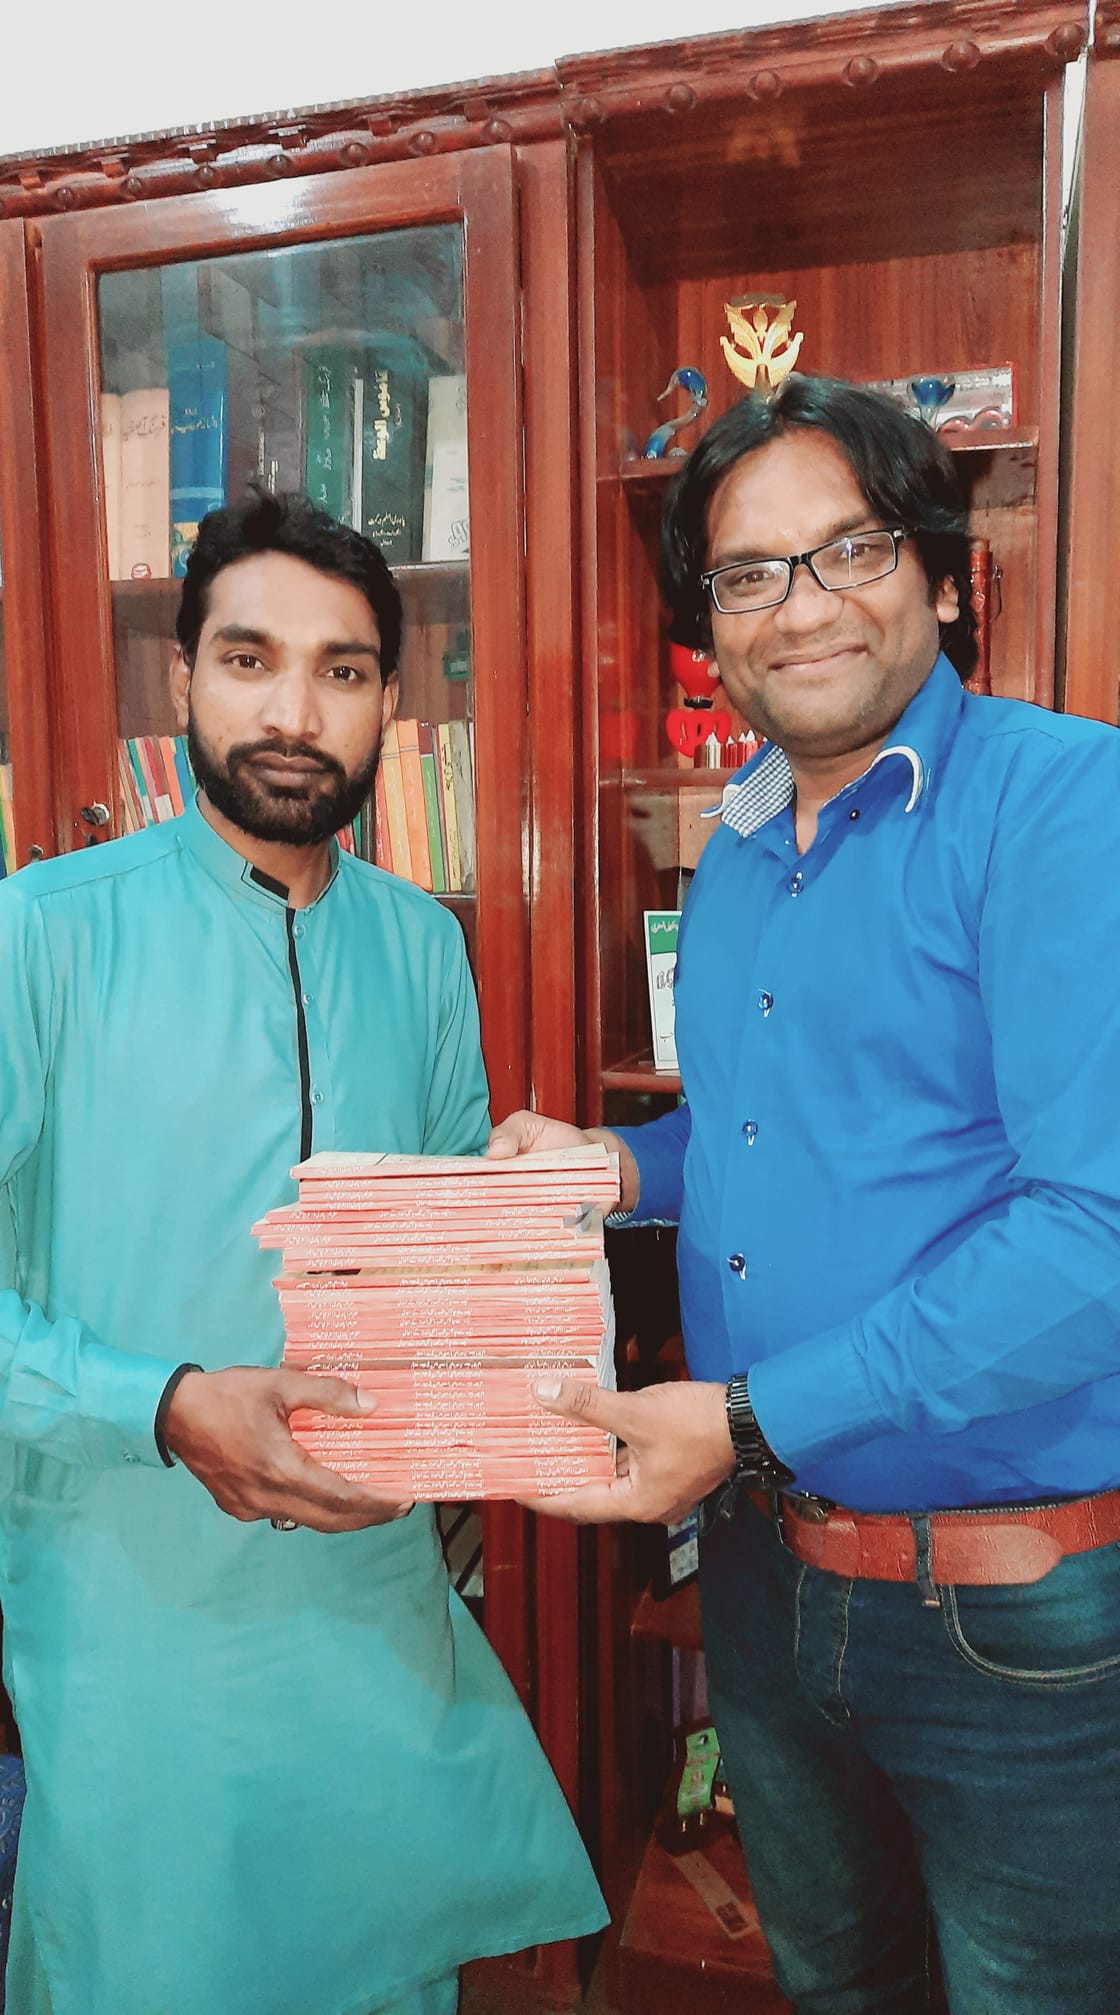 03-31-2021-Pakistan-Books-Img-2.jpg